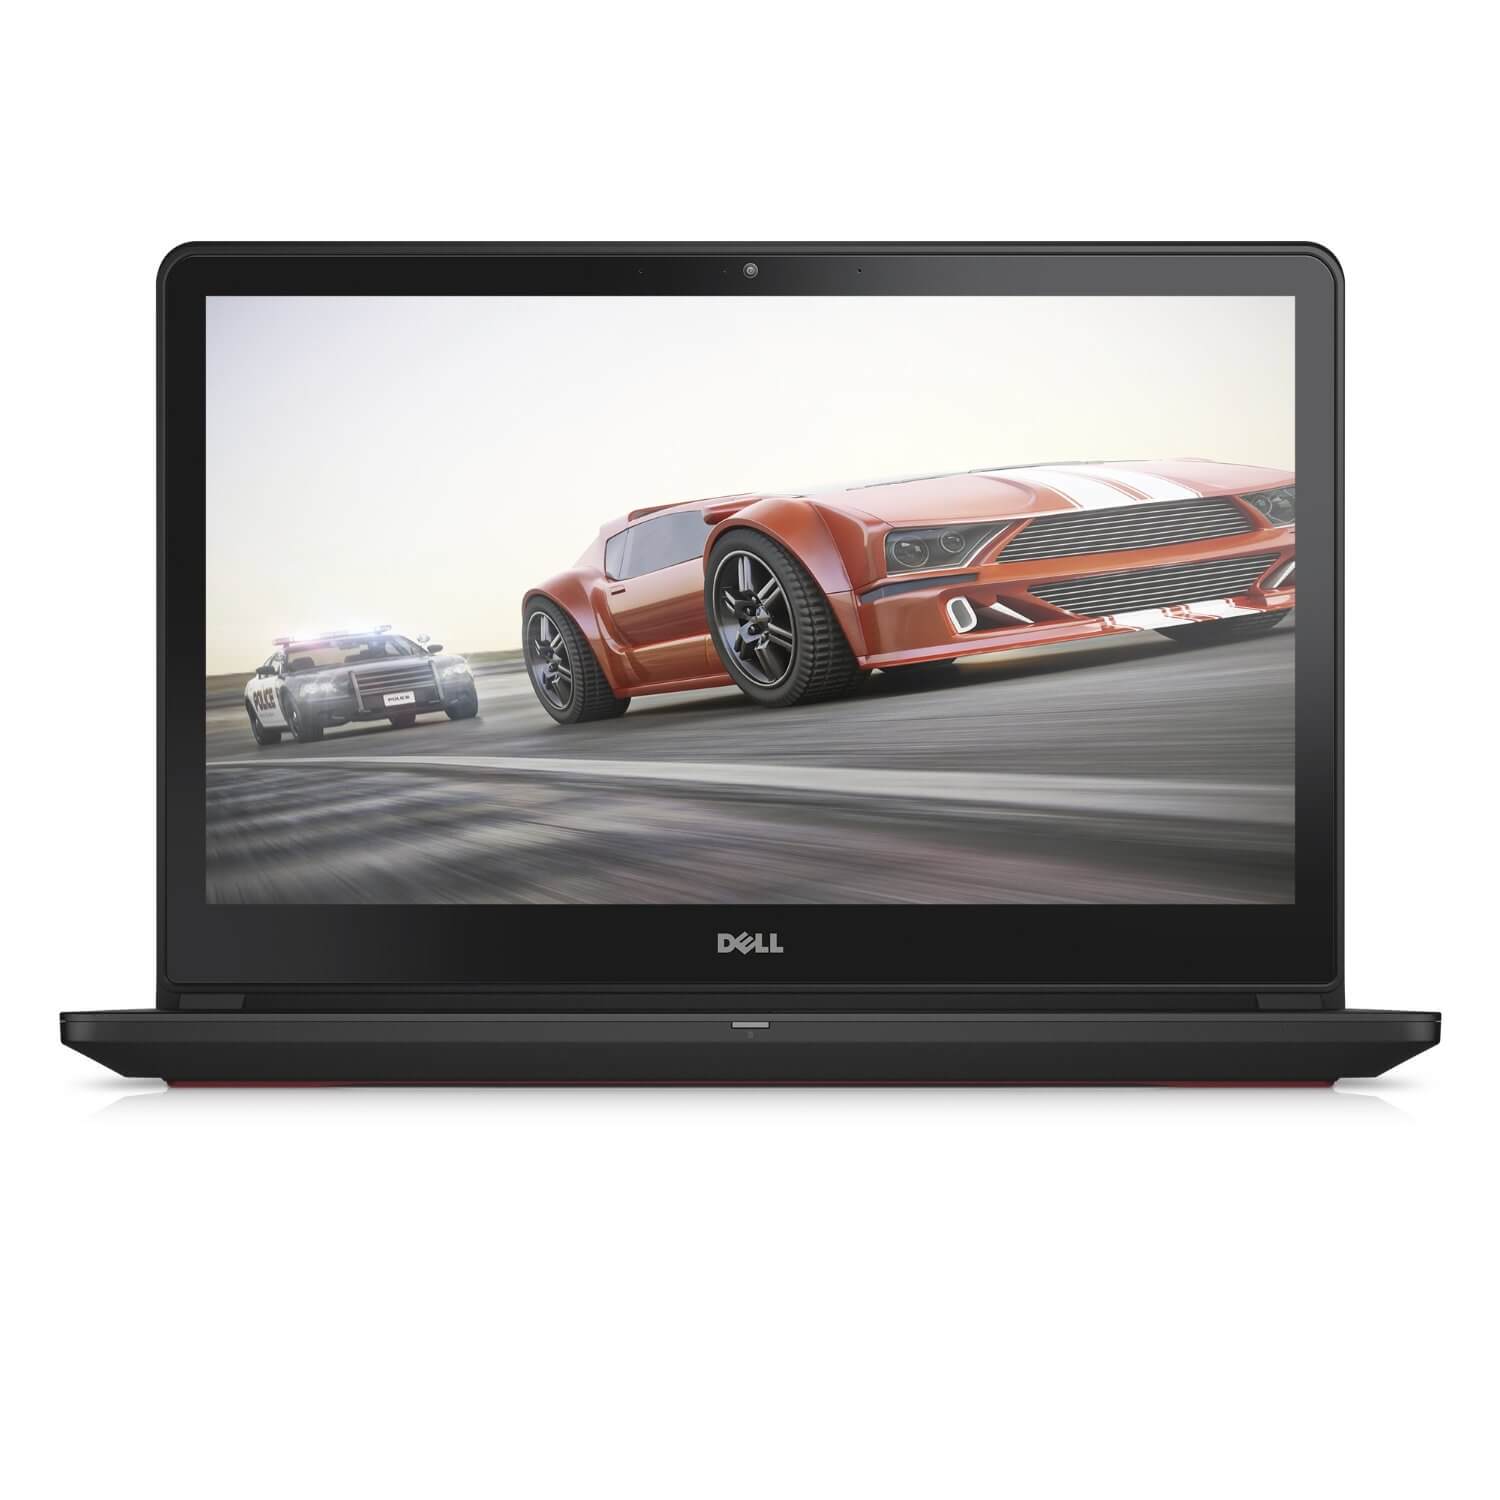 Dell Inspiron i7559-763BLK - below 1000 laptop